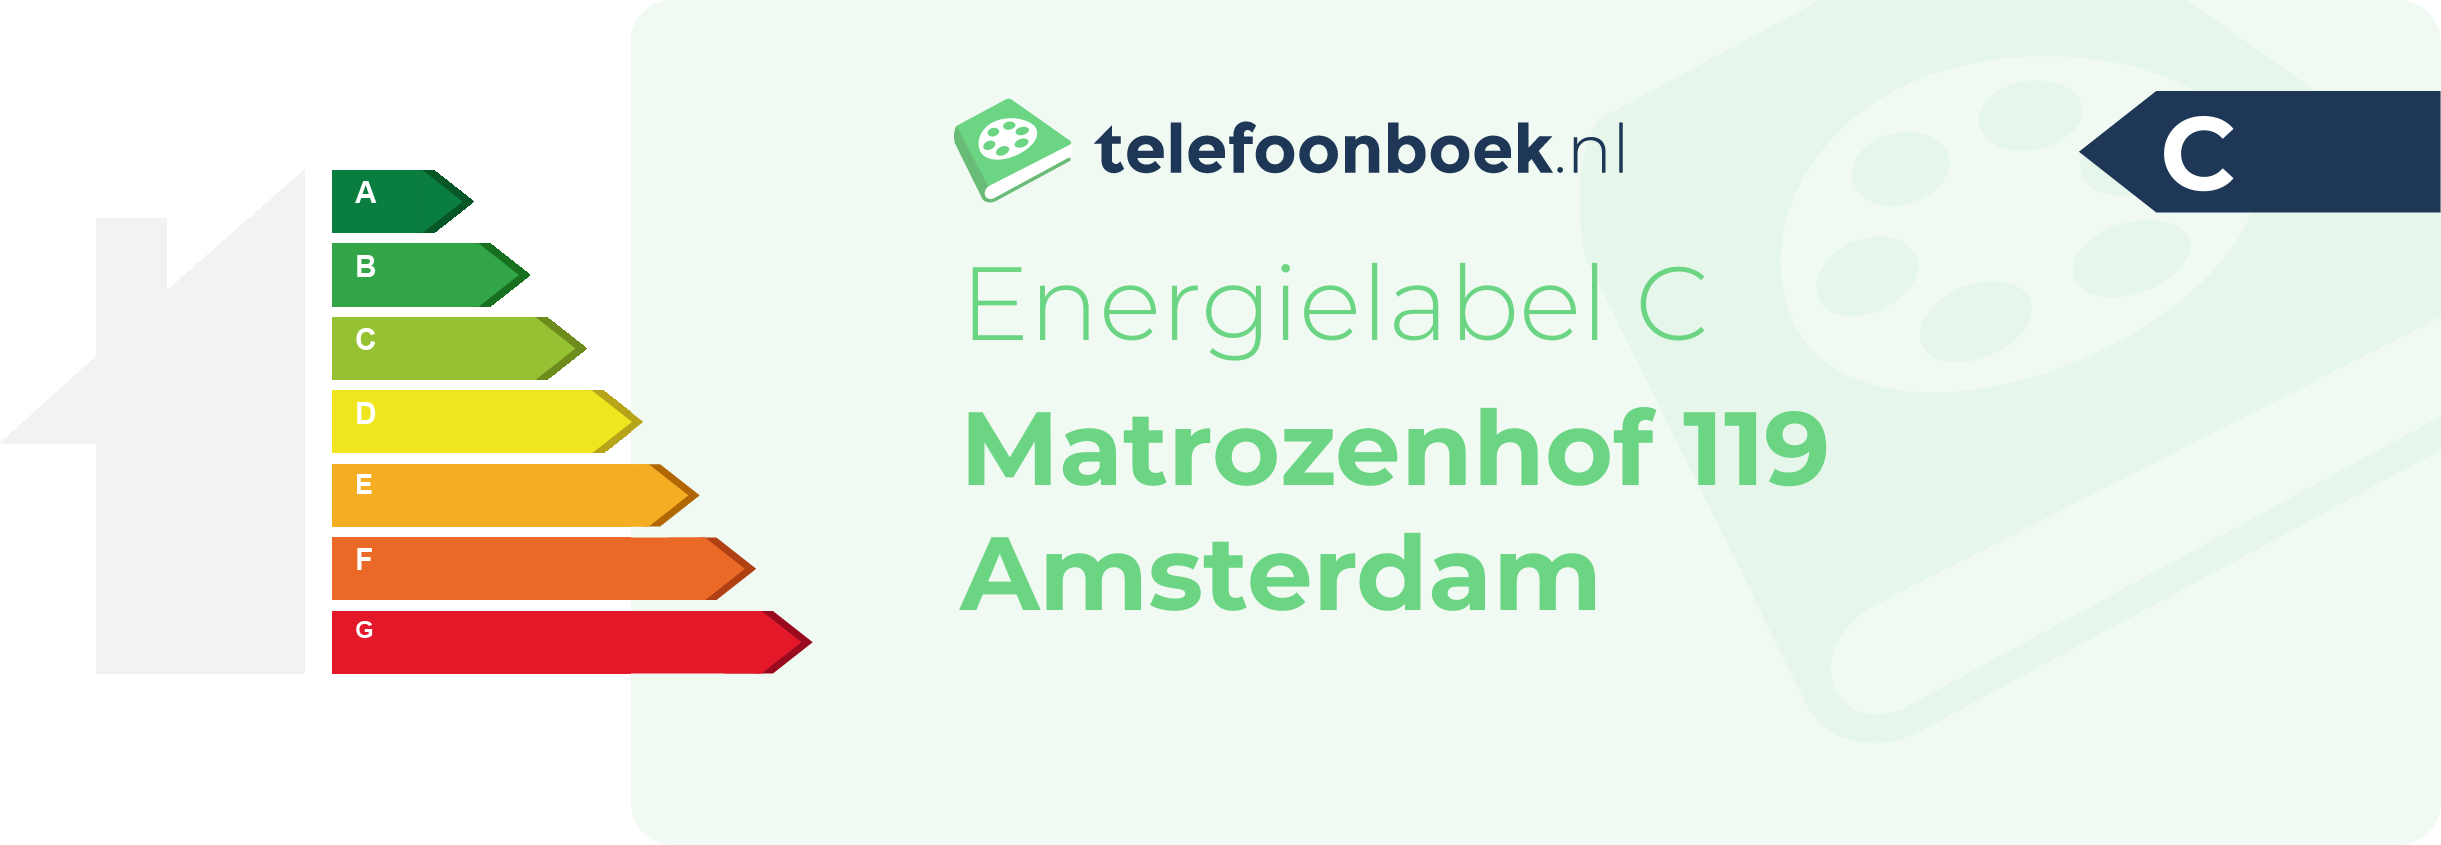 Energielabel Matrozenhof 119 Amsterdam